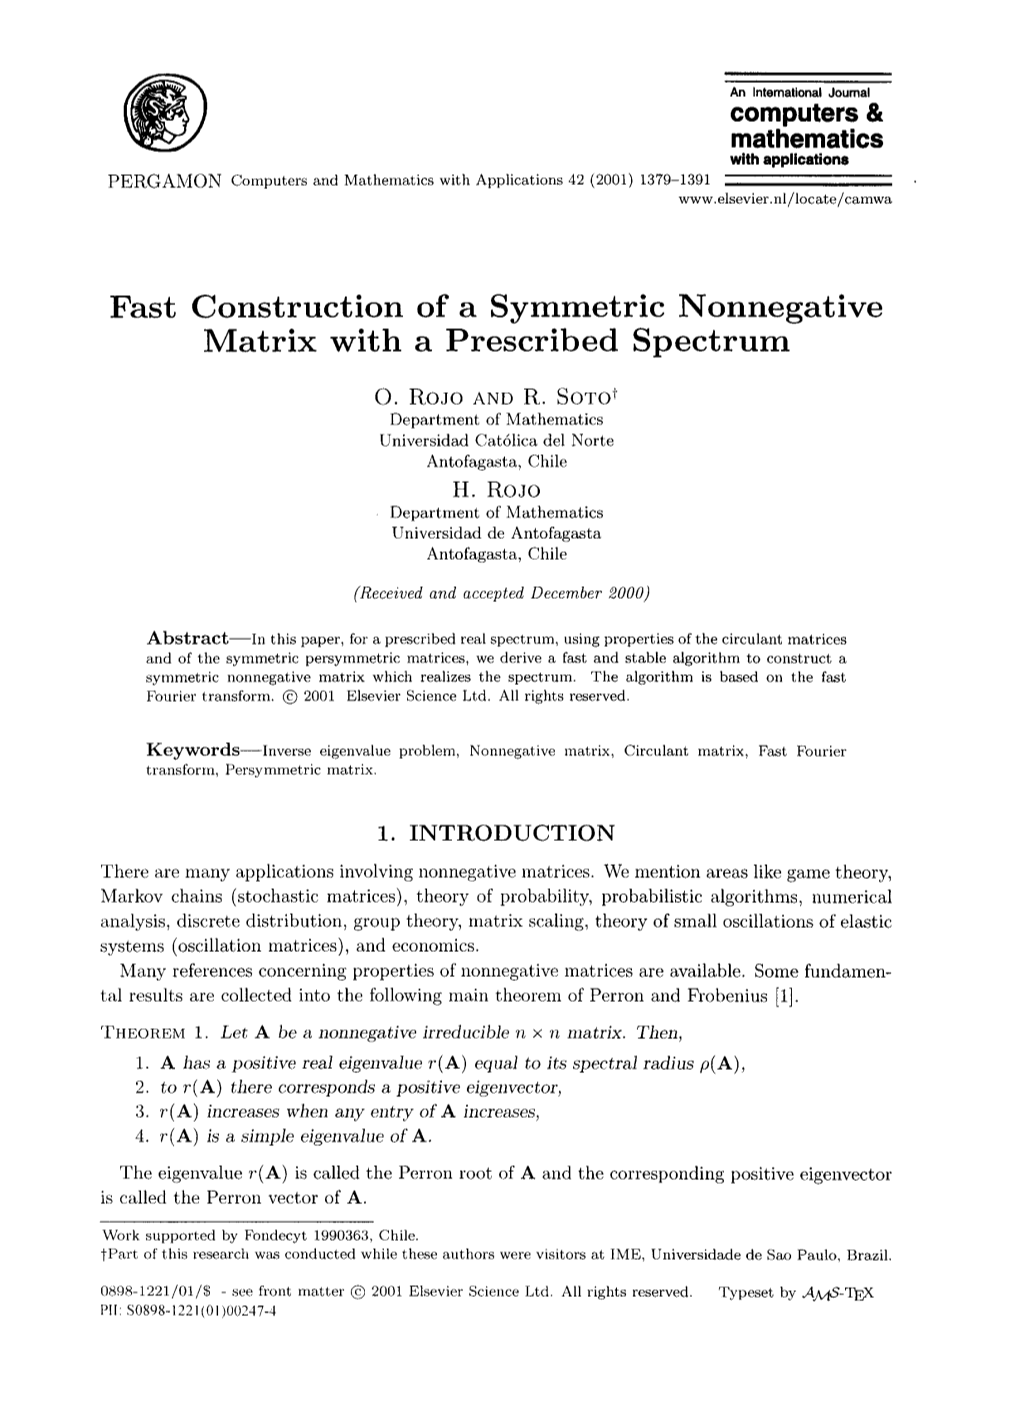 Fast Construction of a Symmetric Nonnegative Matrix with a Prescribed Spectrum